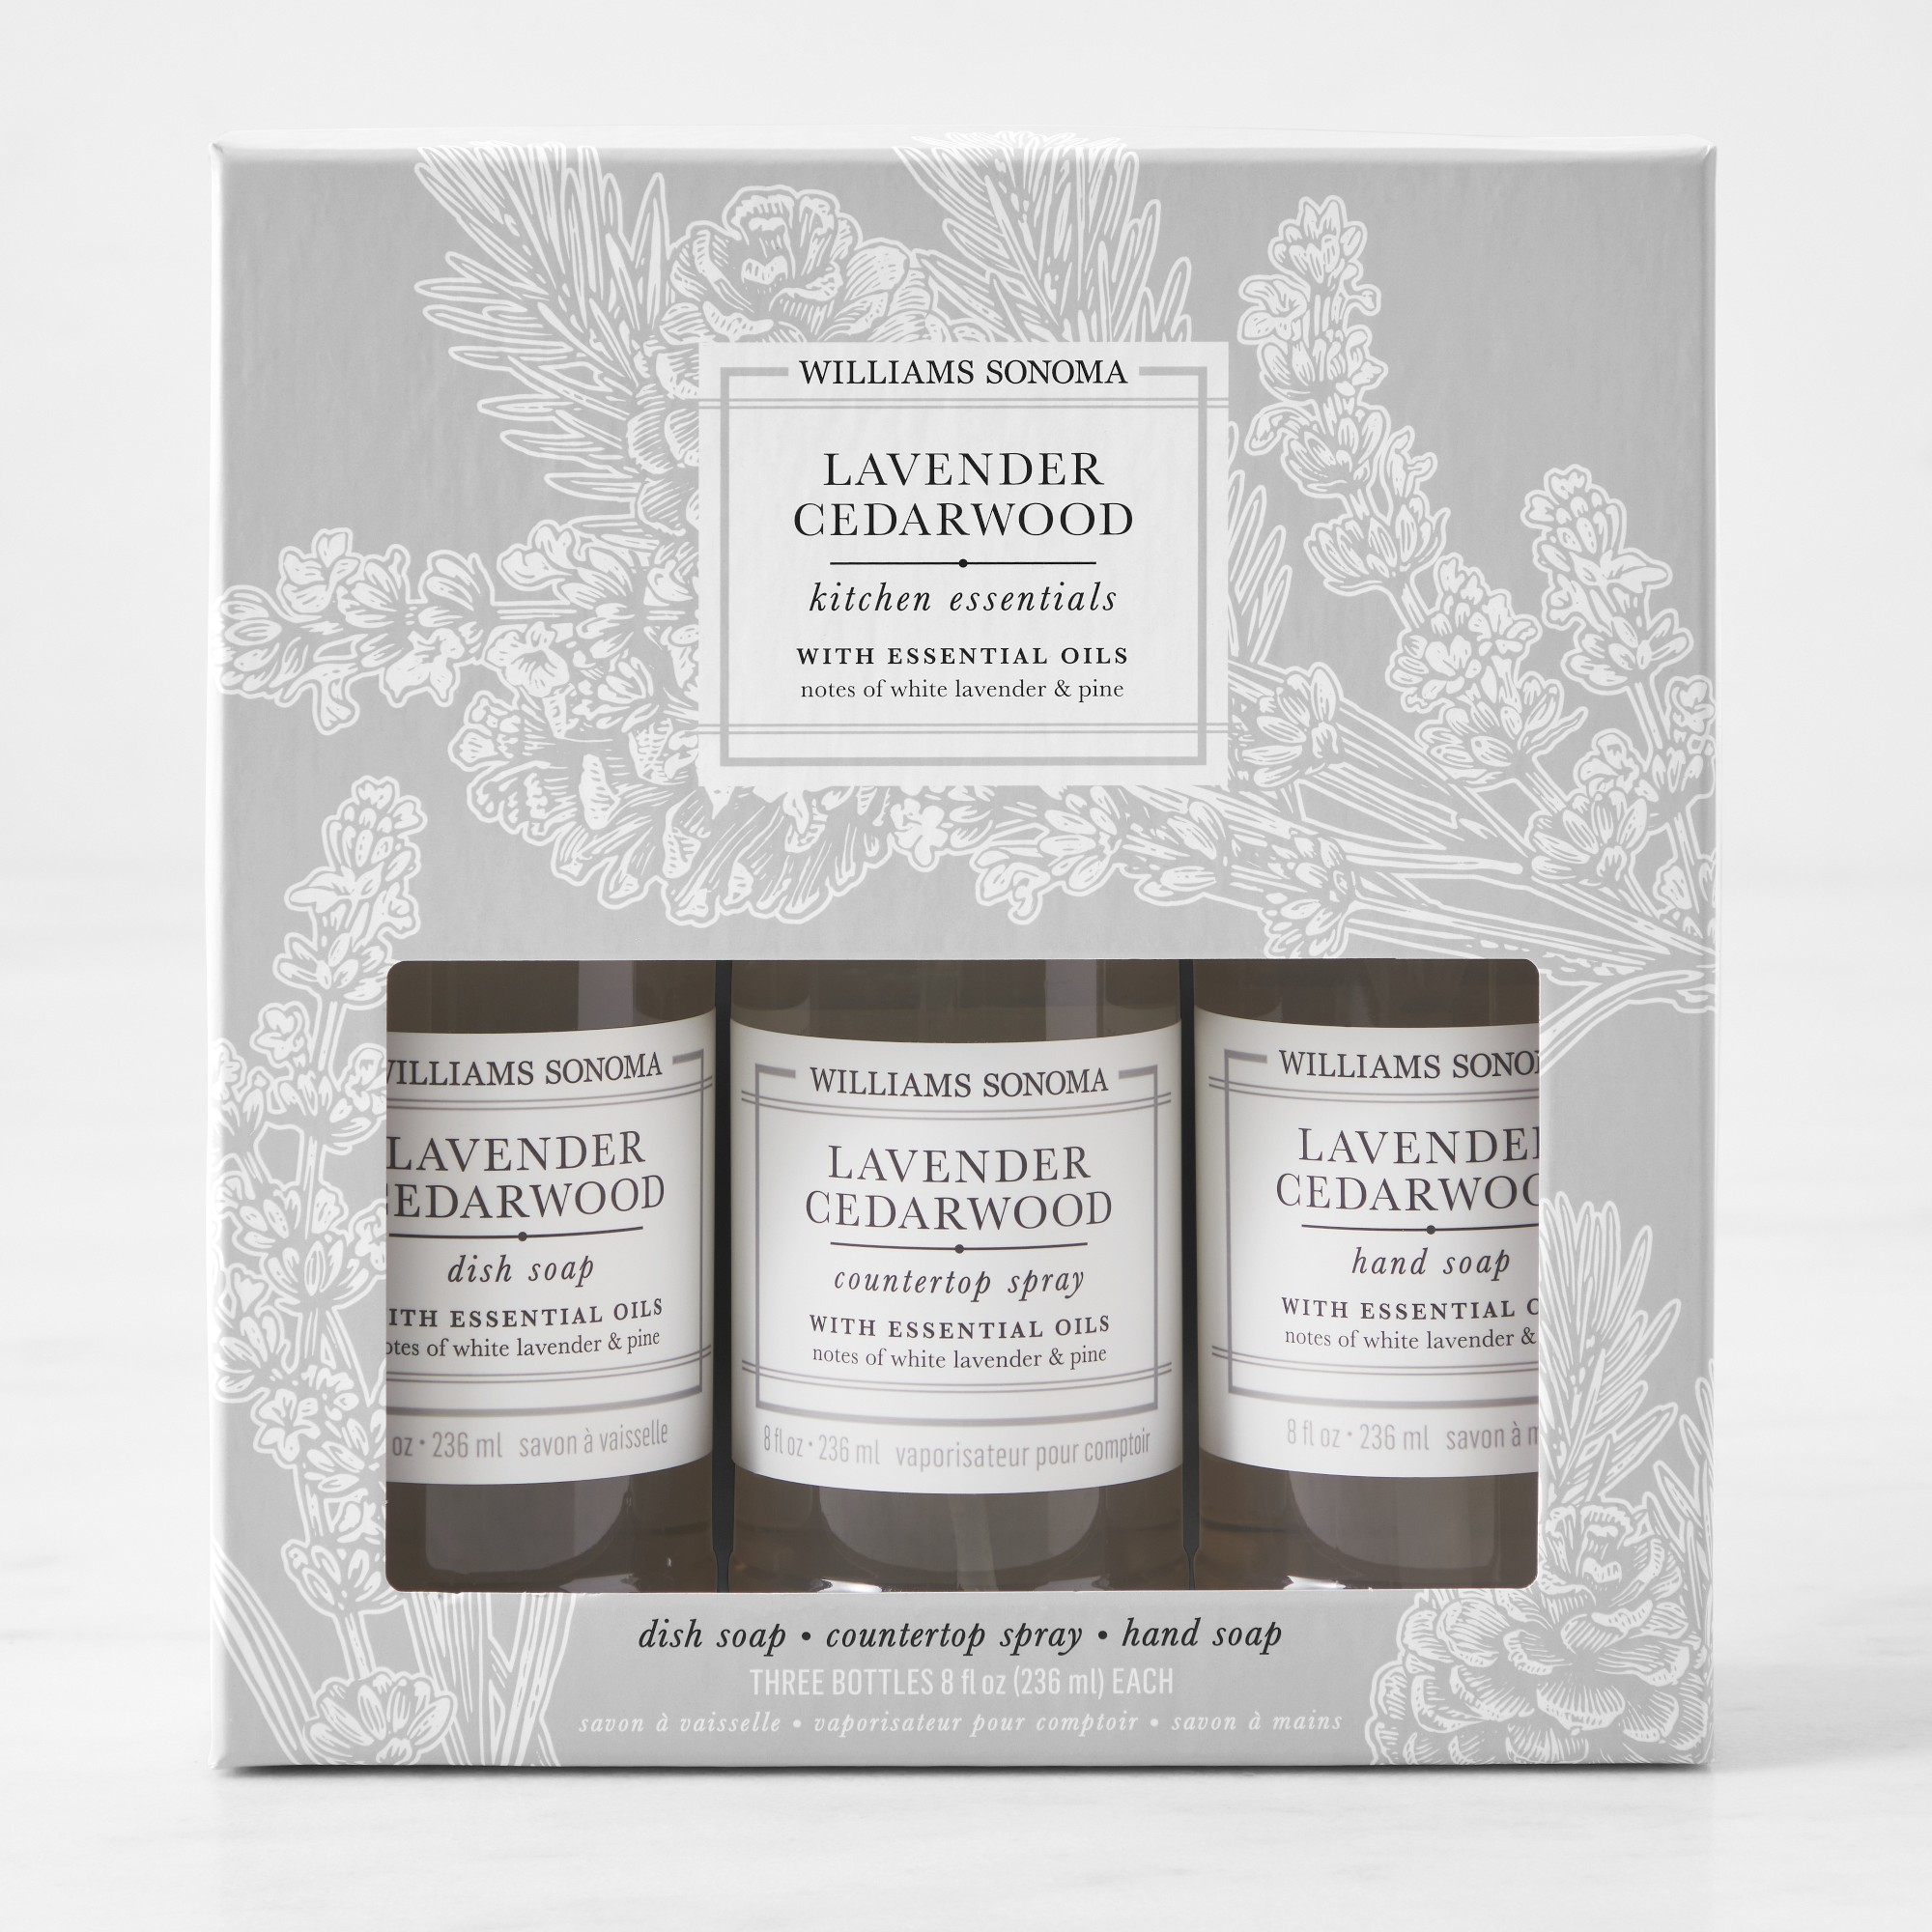 Williams Sonoma Lavender Cedarwood Kitchen Essentials Kit